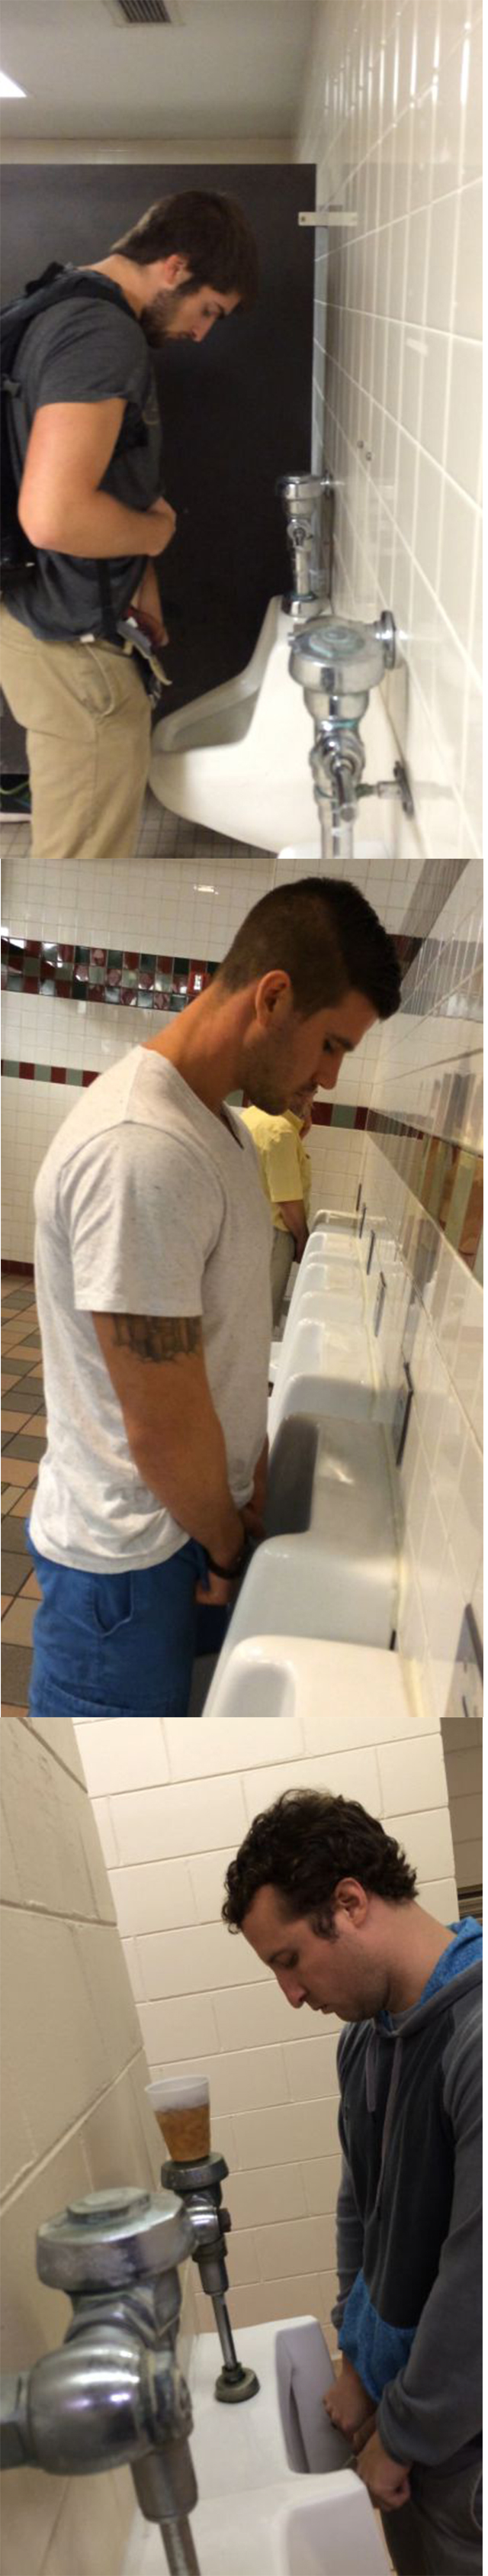 guys caught peeing public urinal